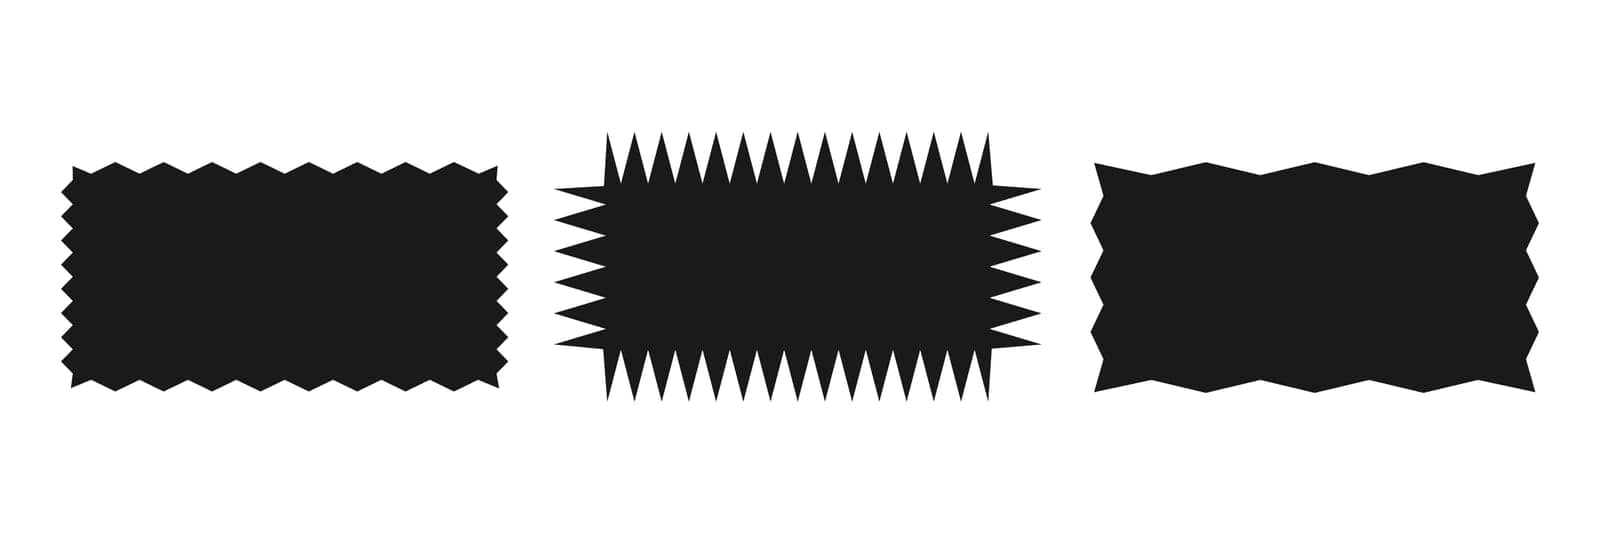 Zigzag rectangular shape. by Mallva